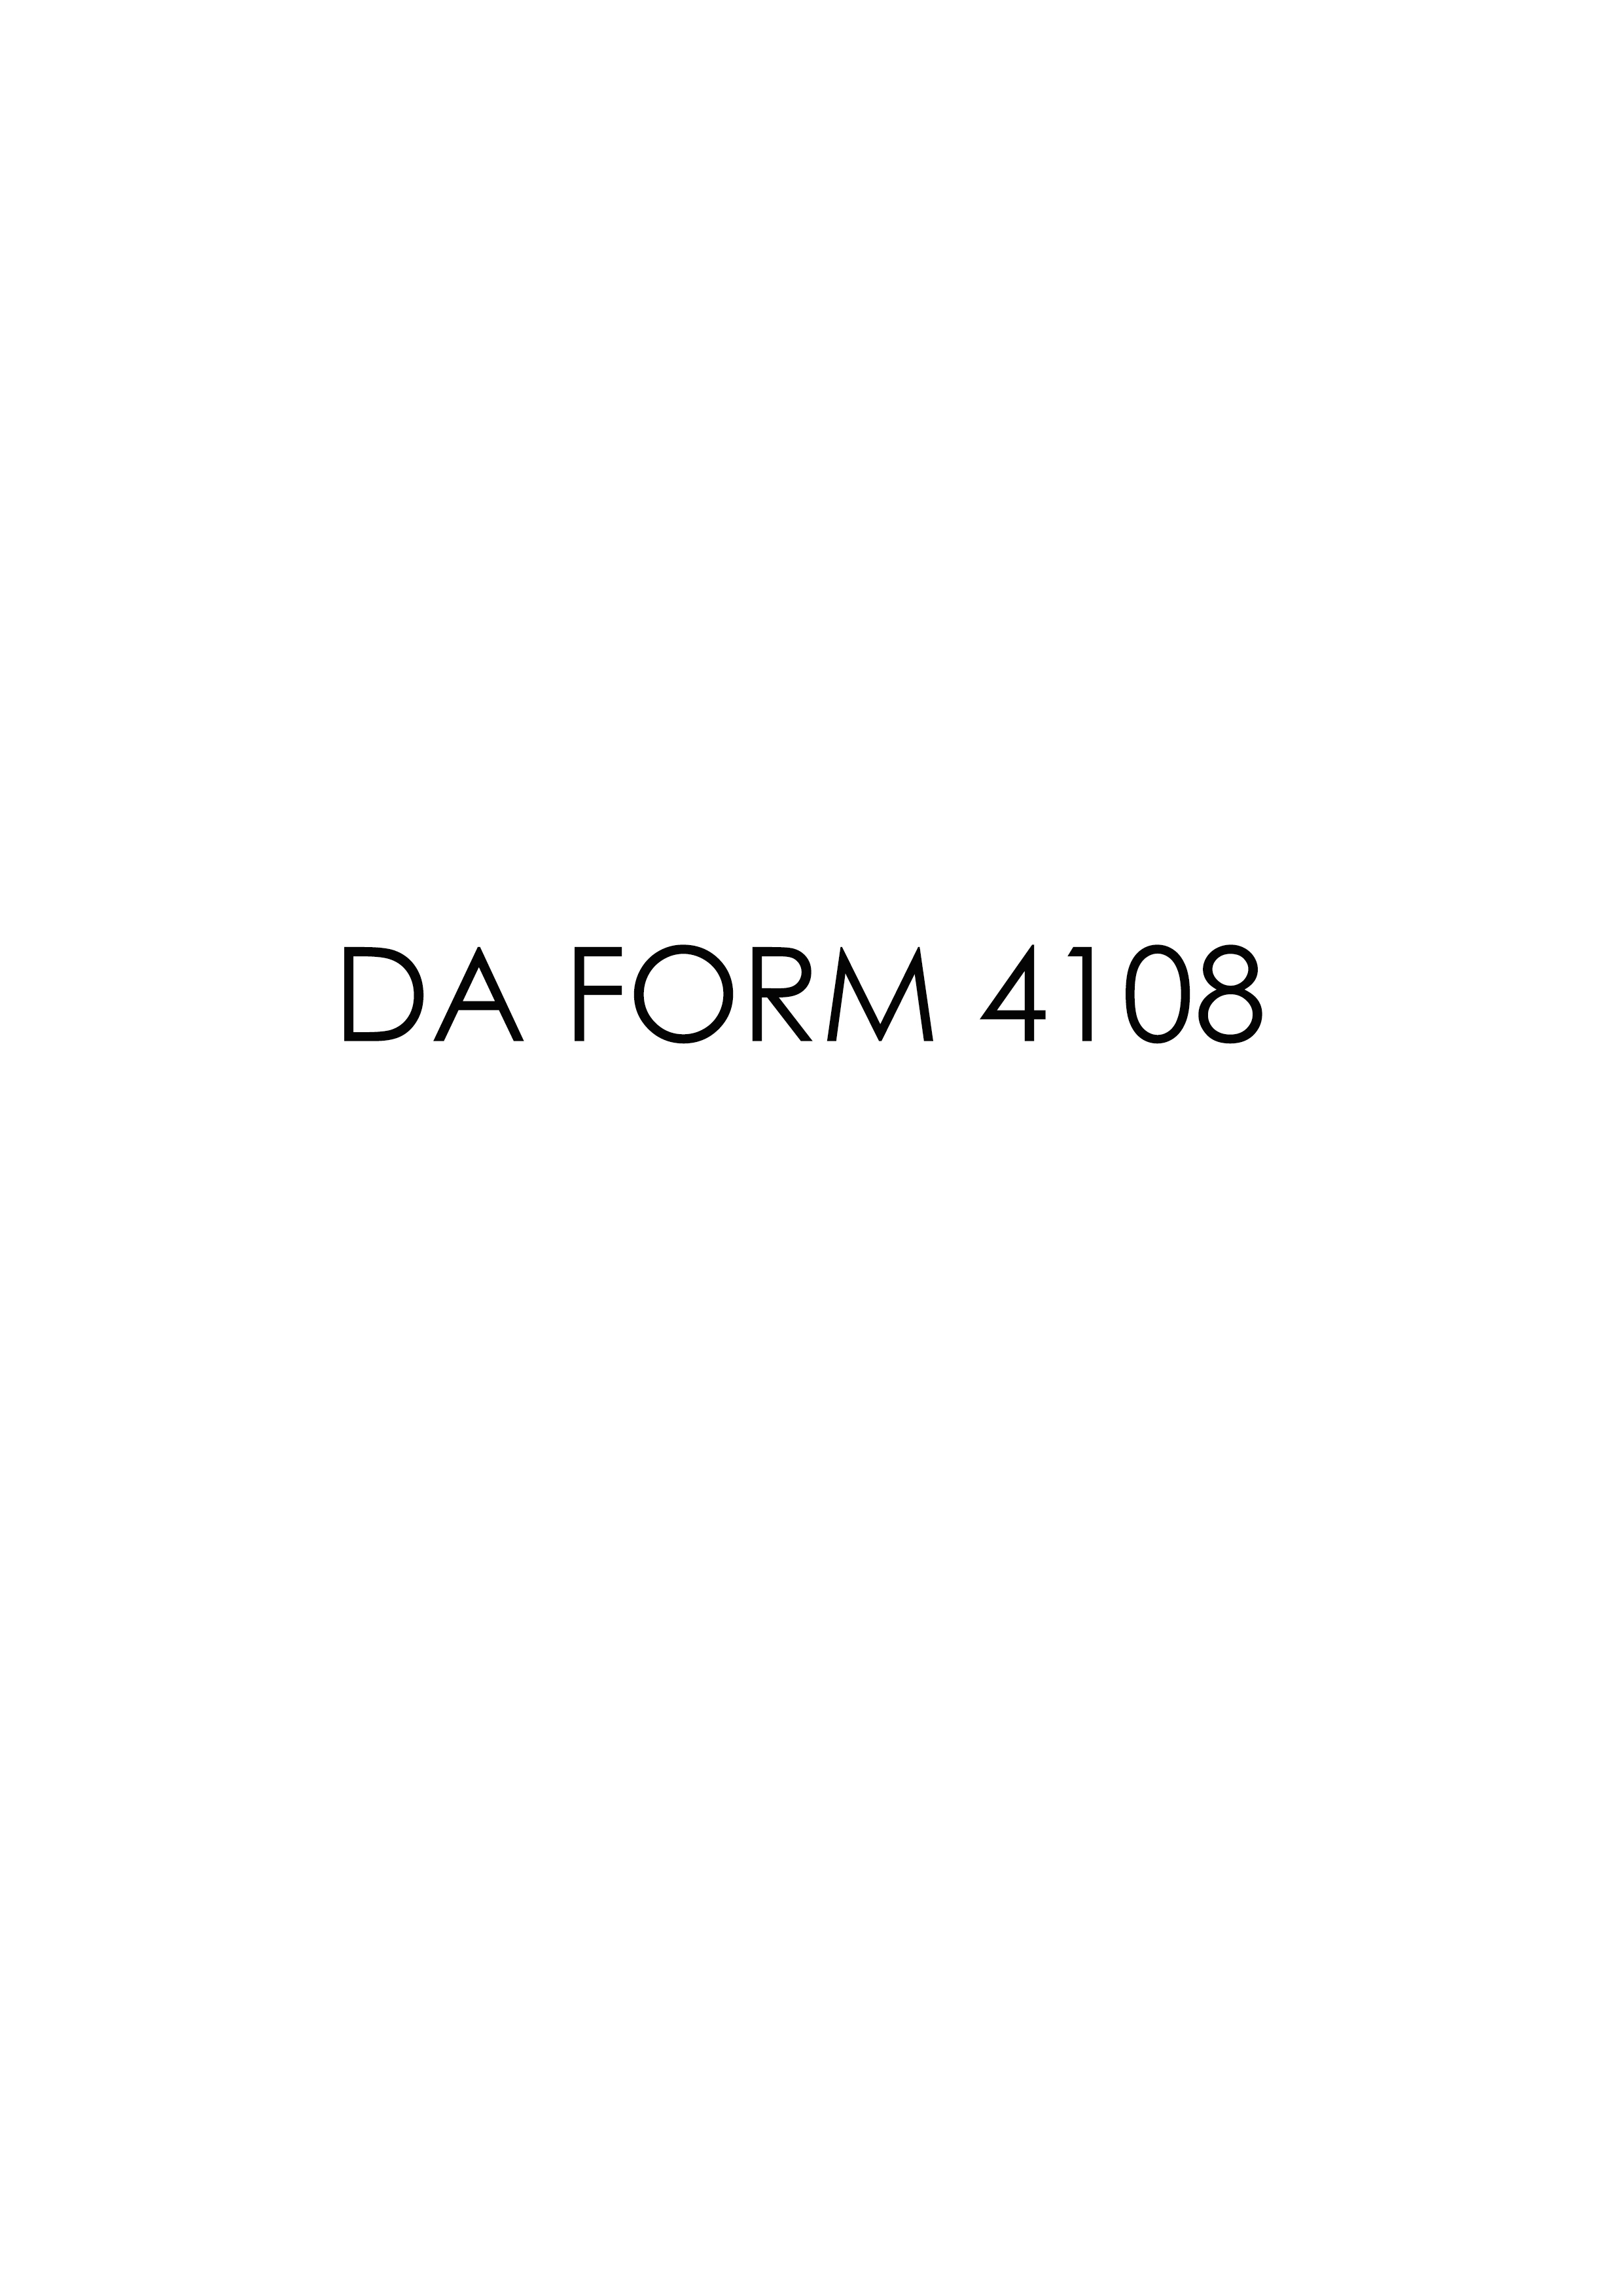 da Form 4108 fillable